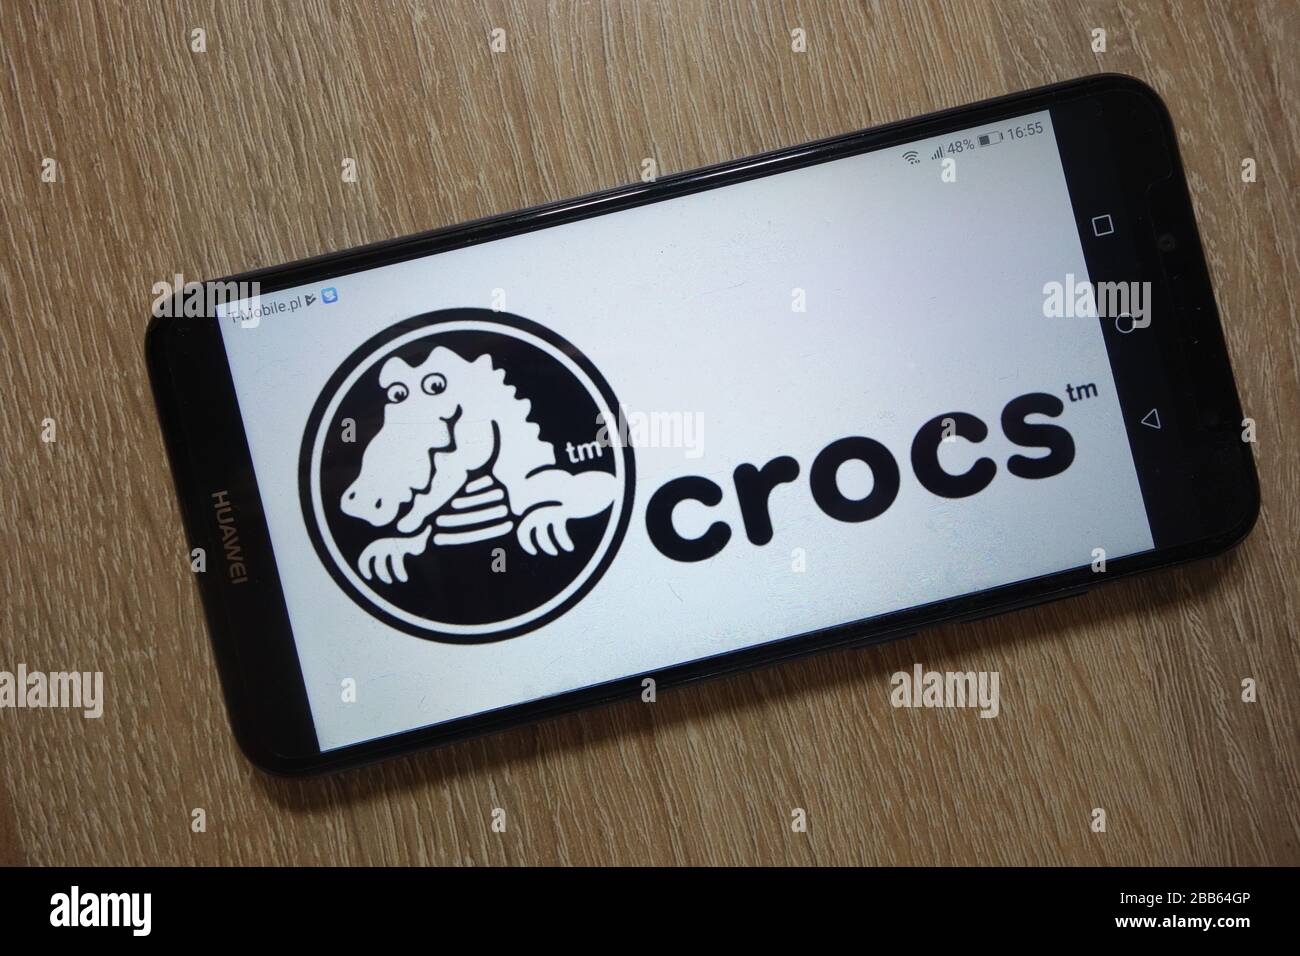 Crocs, Inc. logo displayed on smartphone Stock Photo